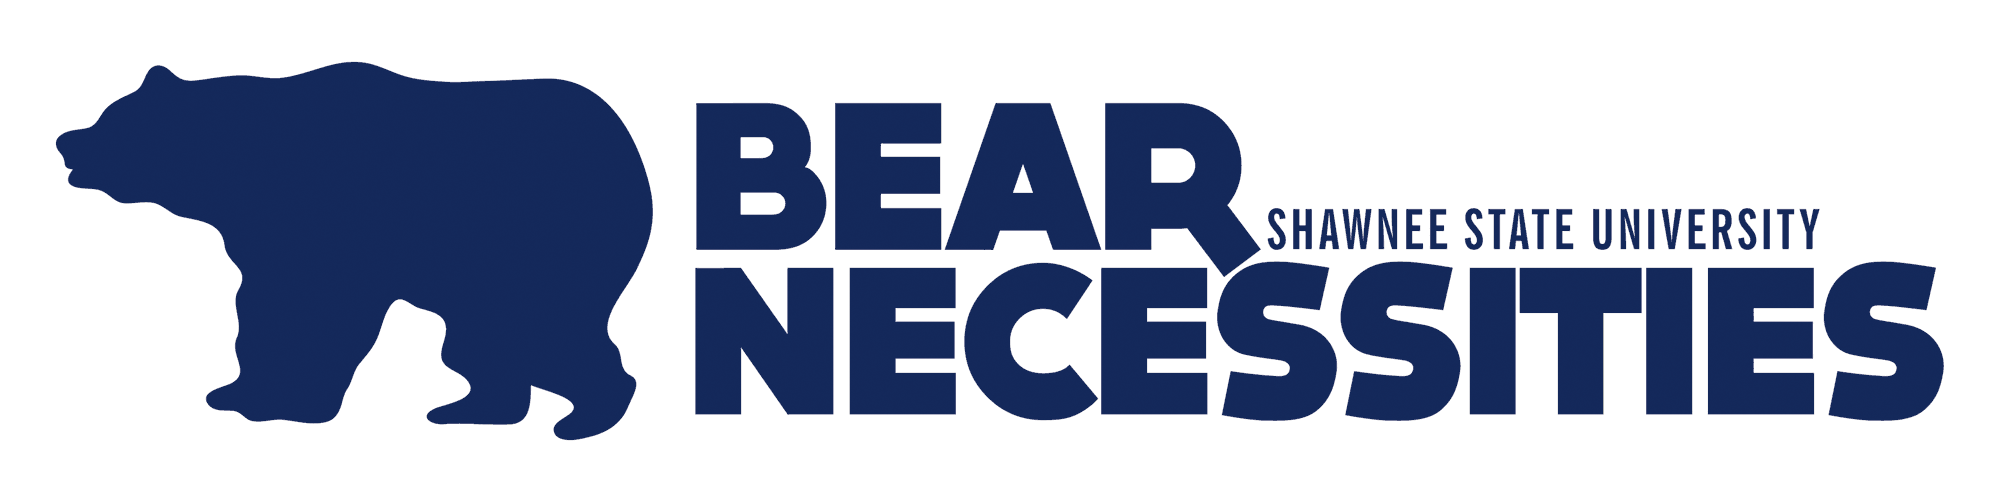 Bear Necessities logo